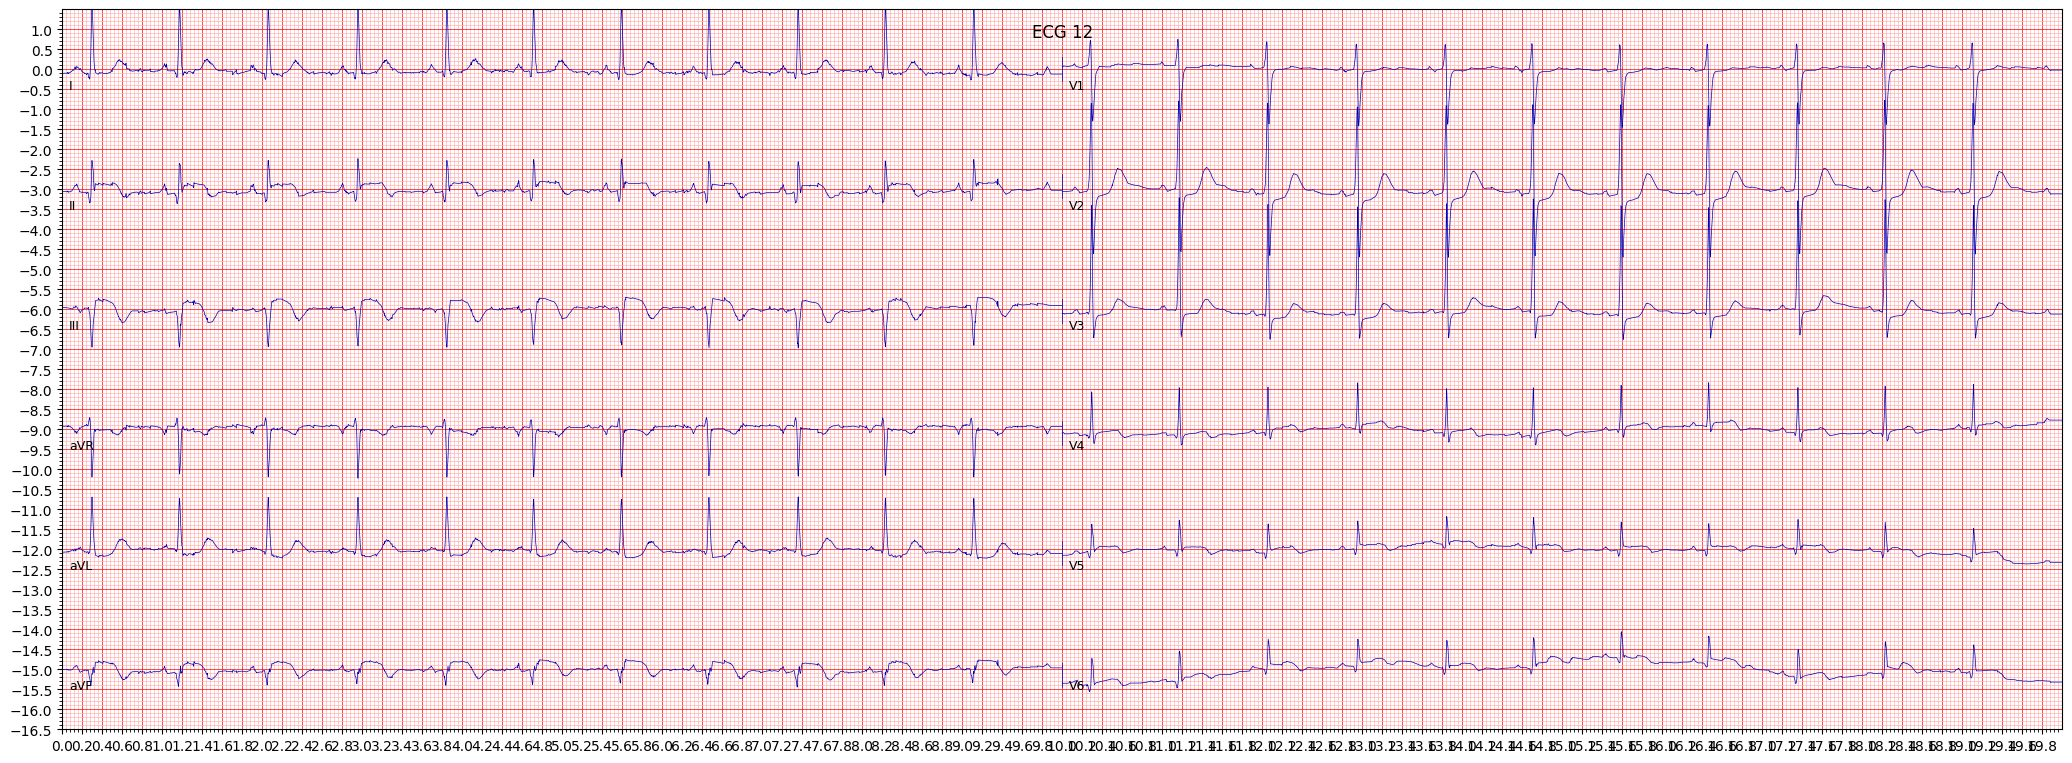 inferoposterolateral myocardial infarction (IPLMI) example 15130